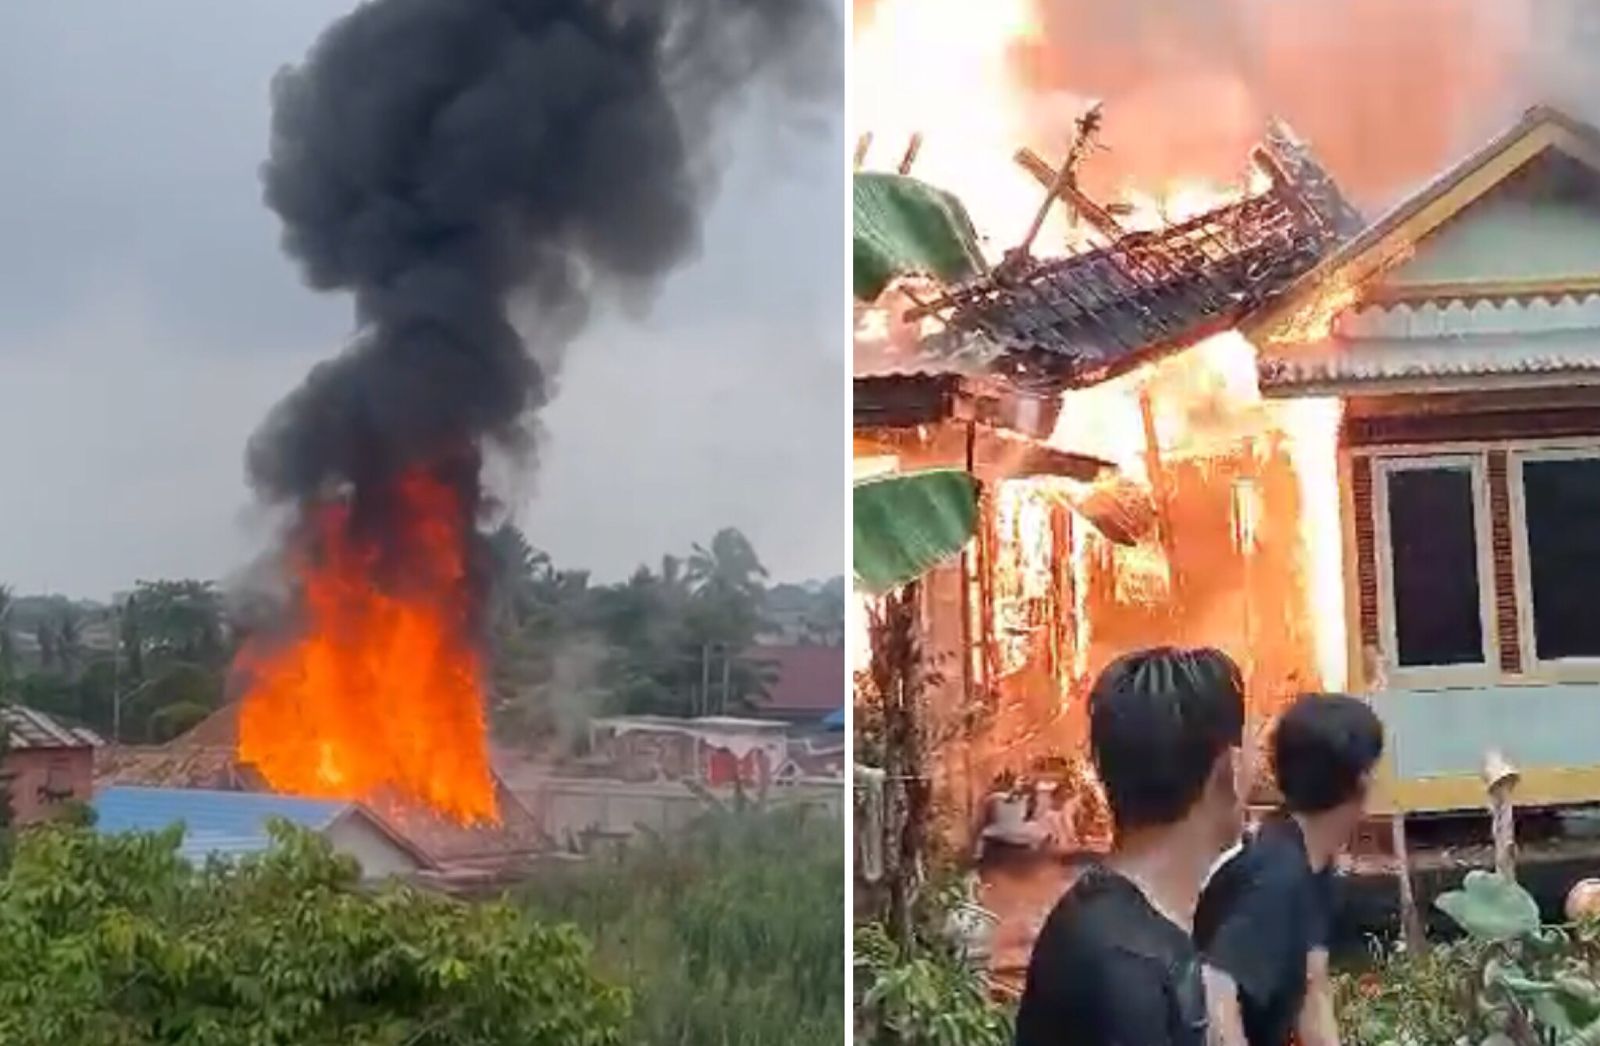 BREAKING NEWS: Api Lalap Sejumlah Rumah di Kawasan Jalan Kadir TKR Gandus Palembang